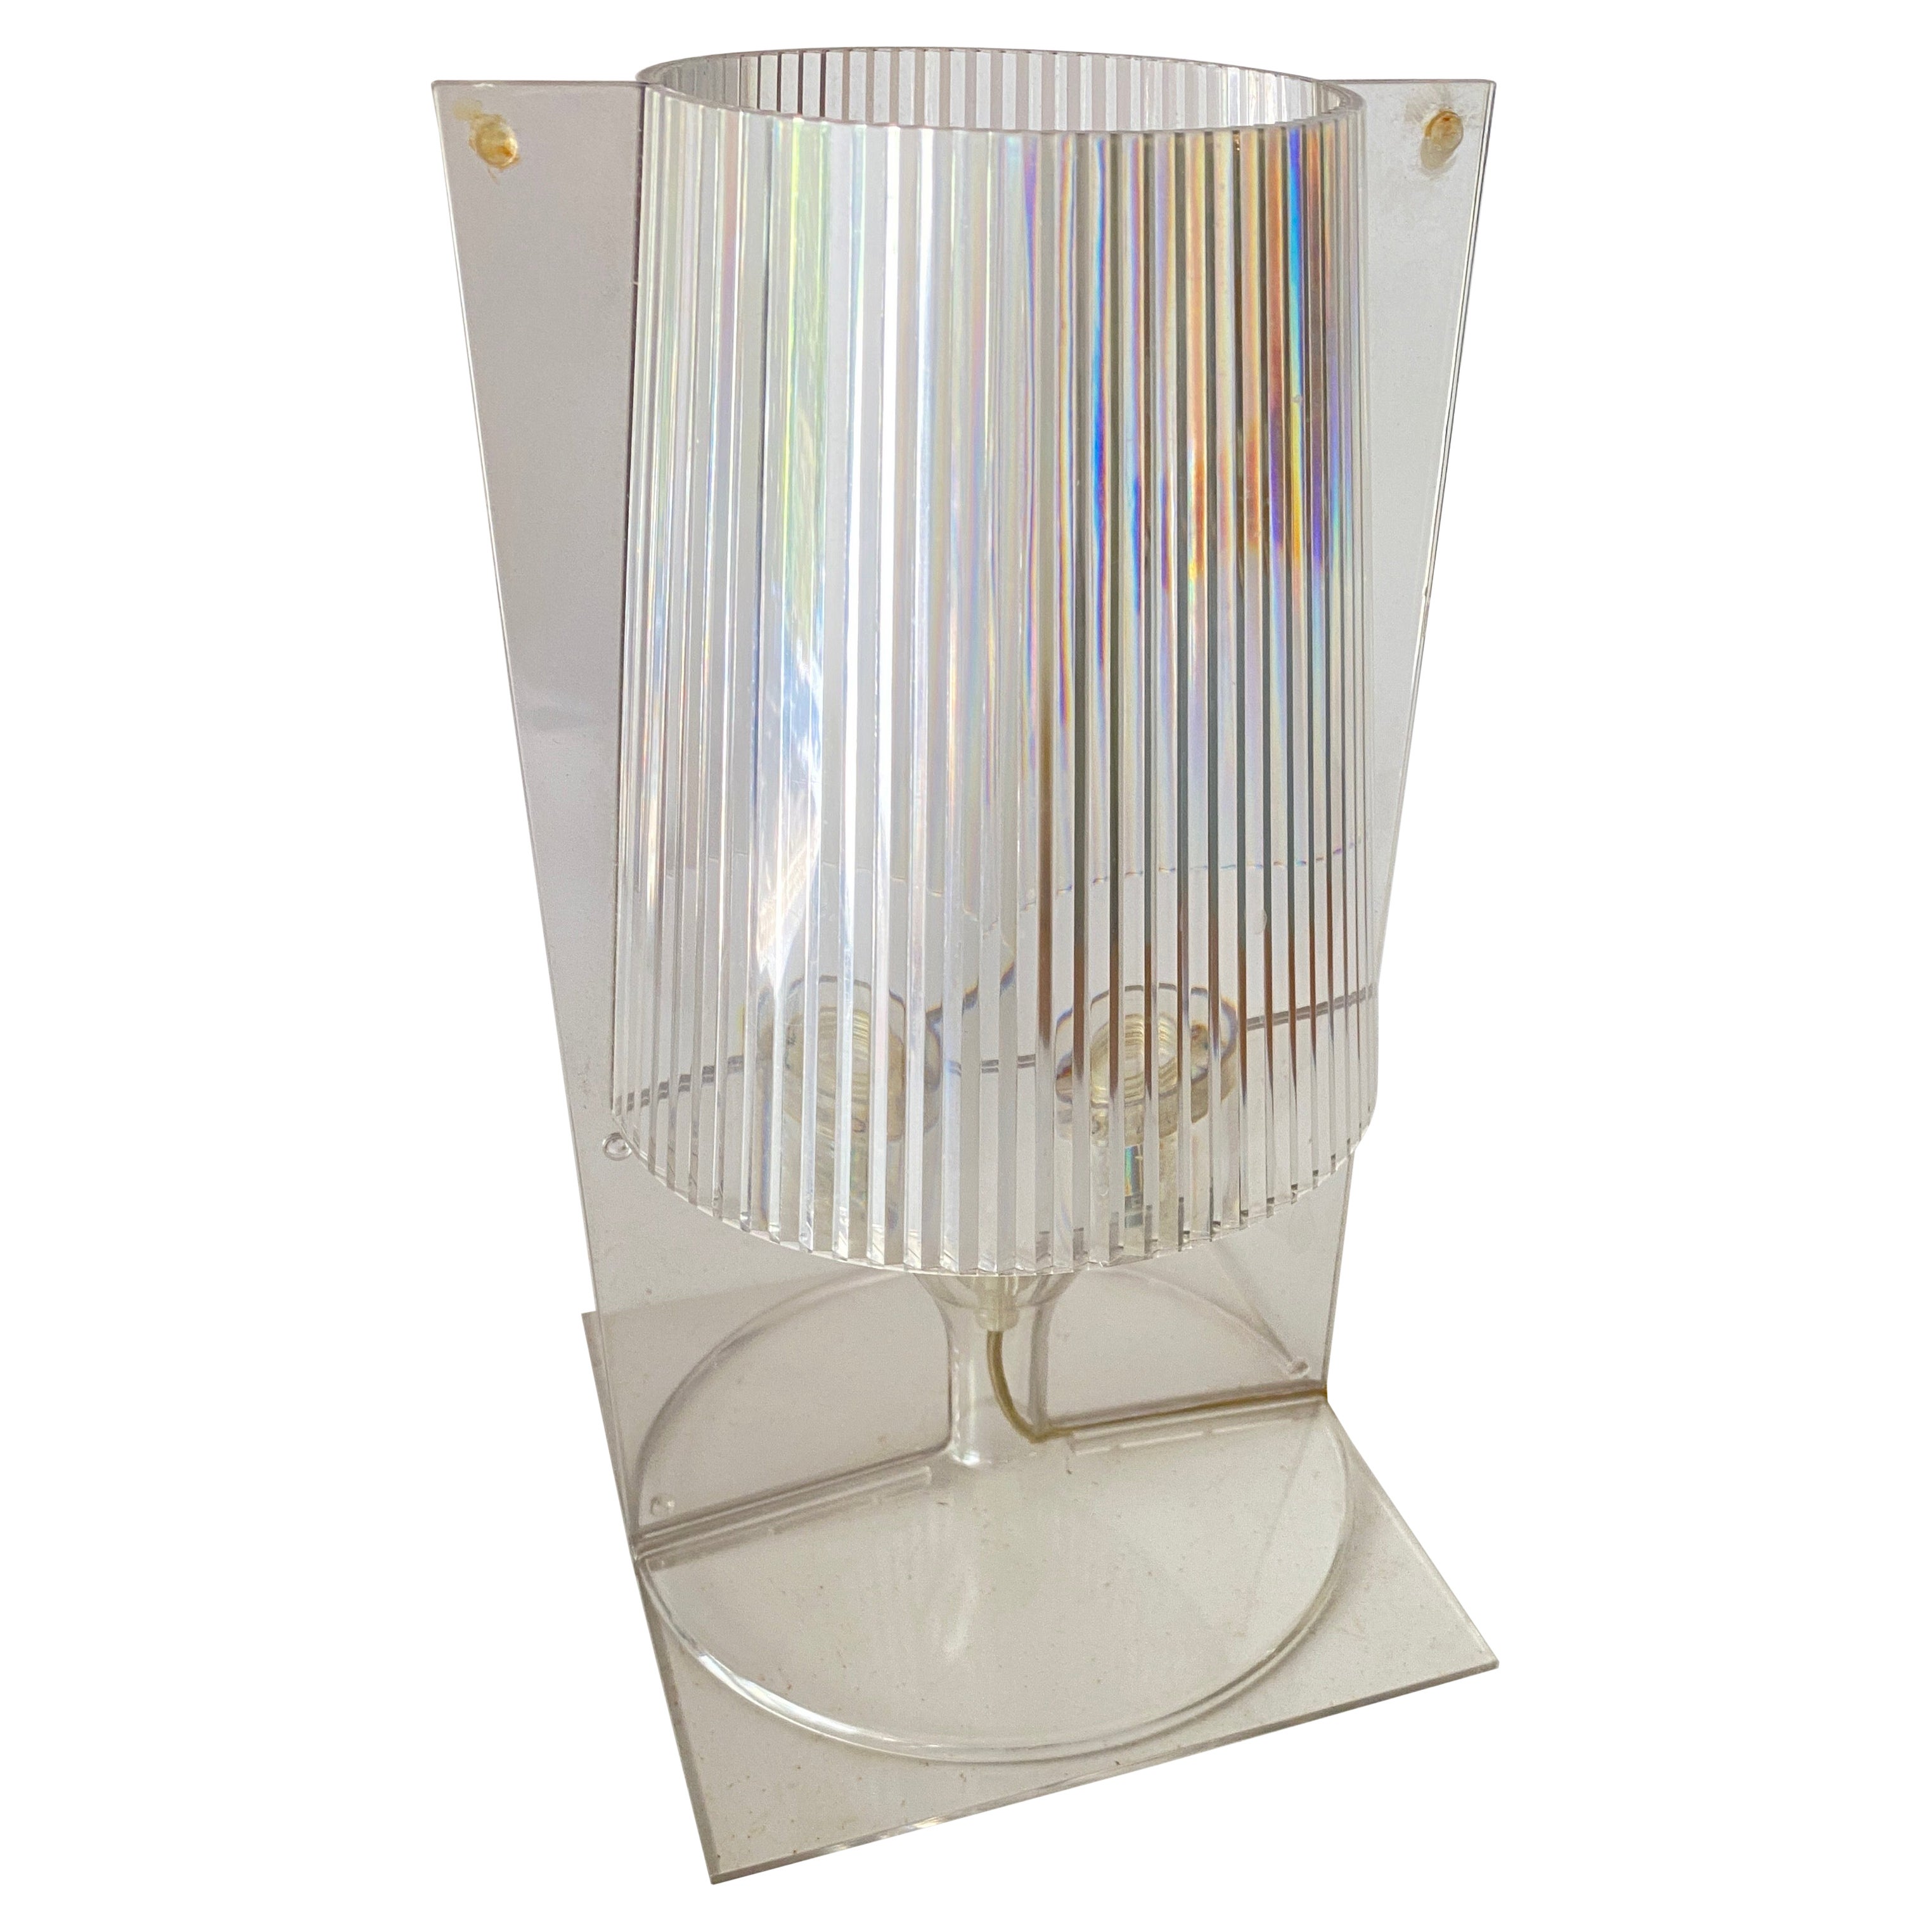  Kartell Take Lamp in Crystal by Ferruccio Laviani, Italian 21 Century For Sale